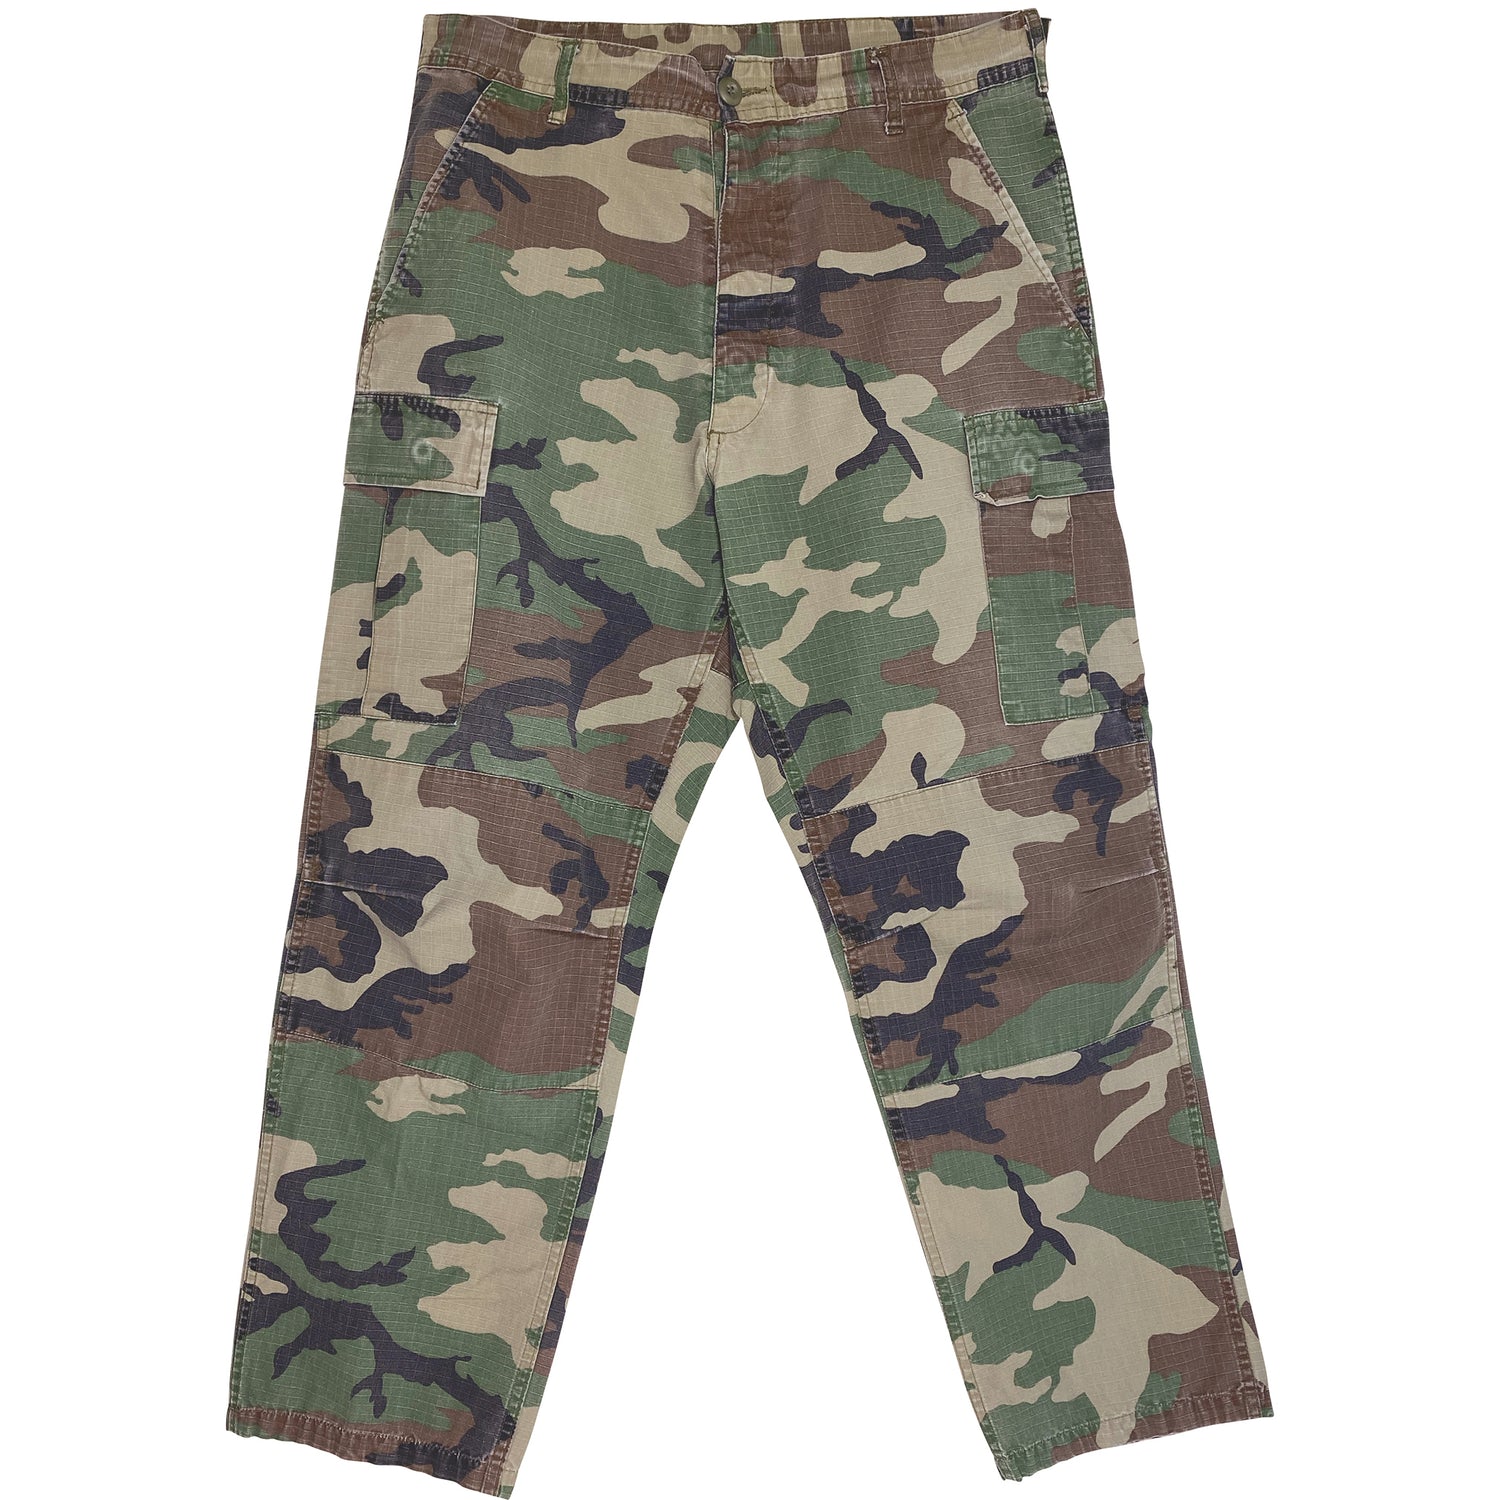 Vintage Army Pants - Size 31